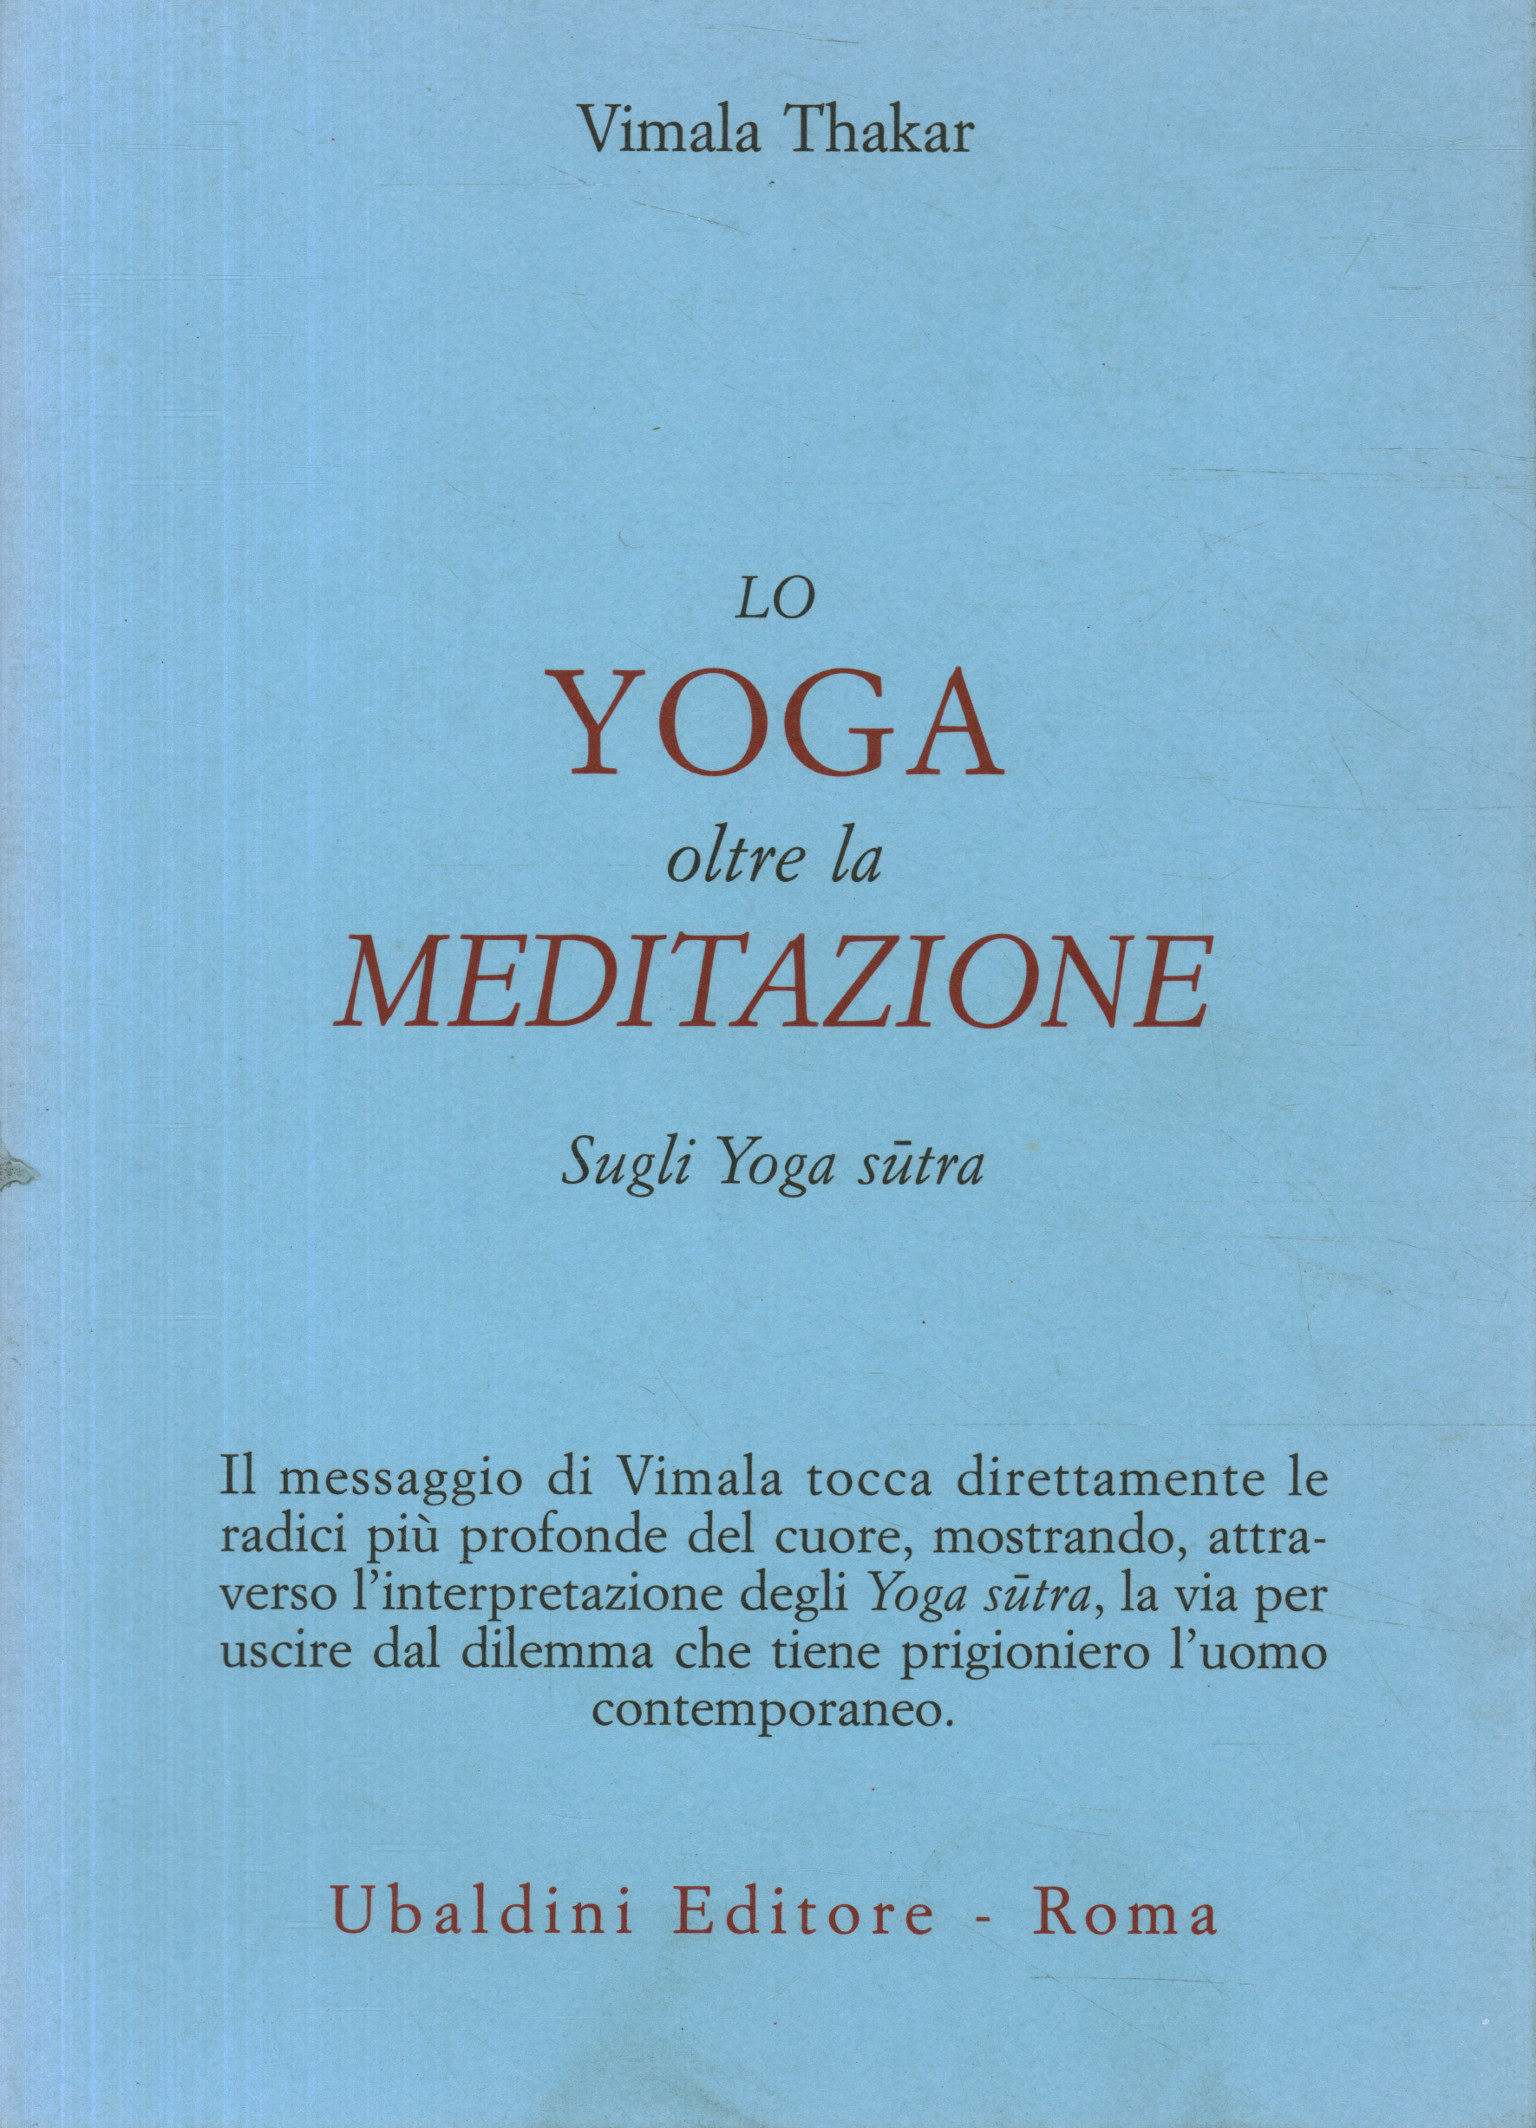 Yoga jenseits der Meditation